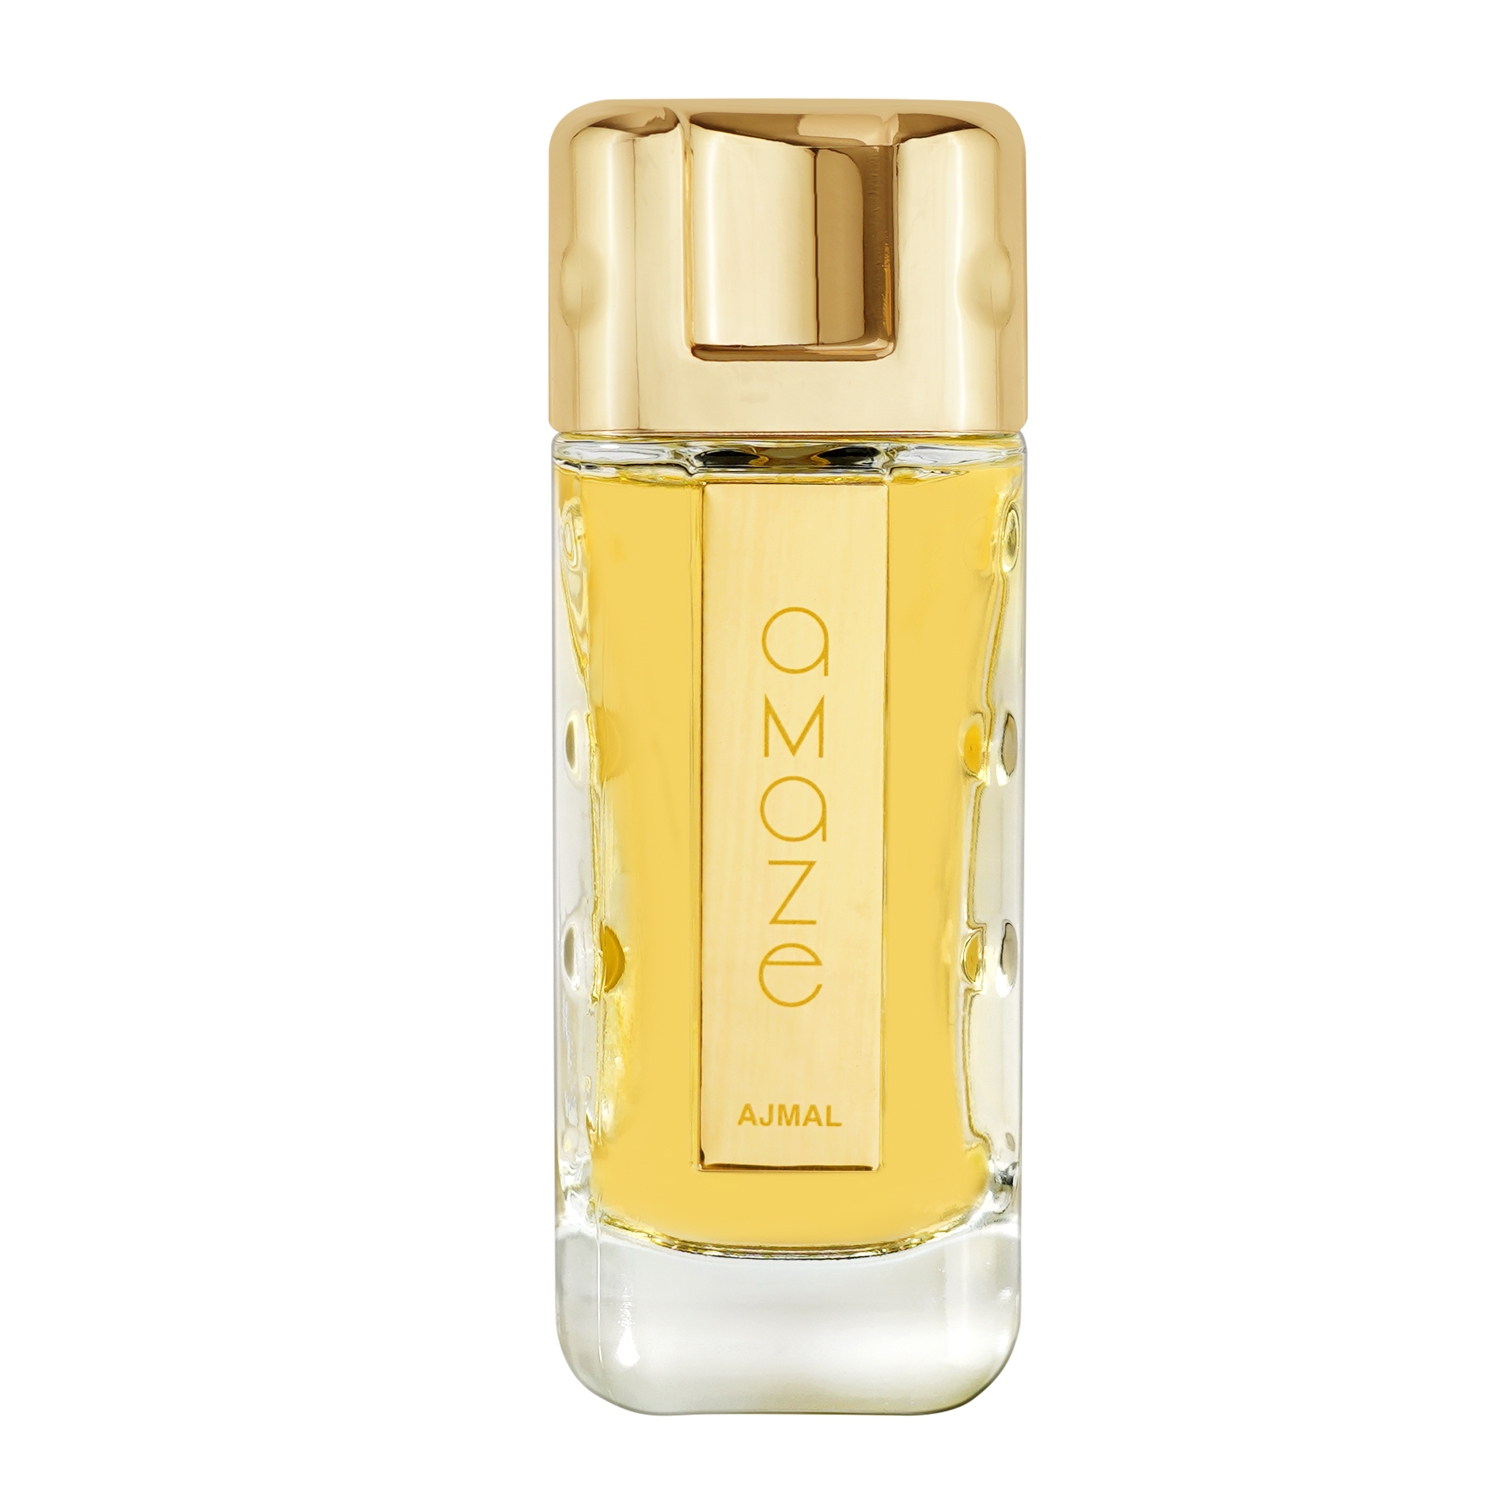 Ajmal | Ajmal Amaze Eau De Parfum Long Lasting Woody Scent Spray 75 ML Gift For Women - Made In Dubai